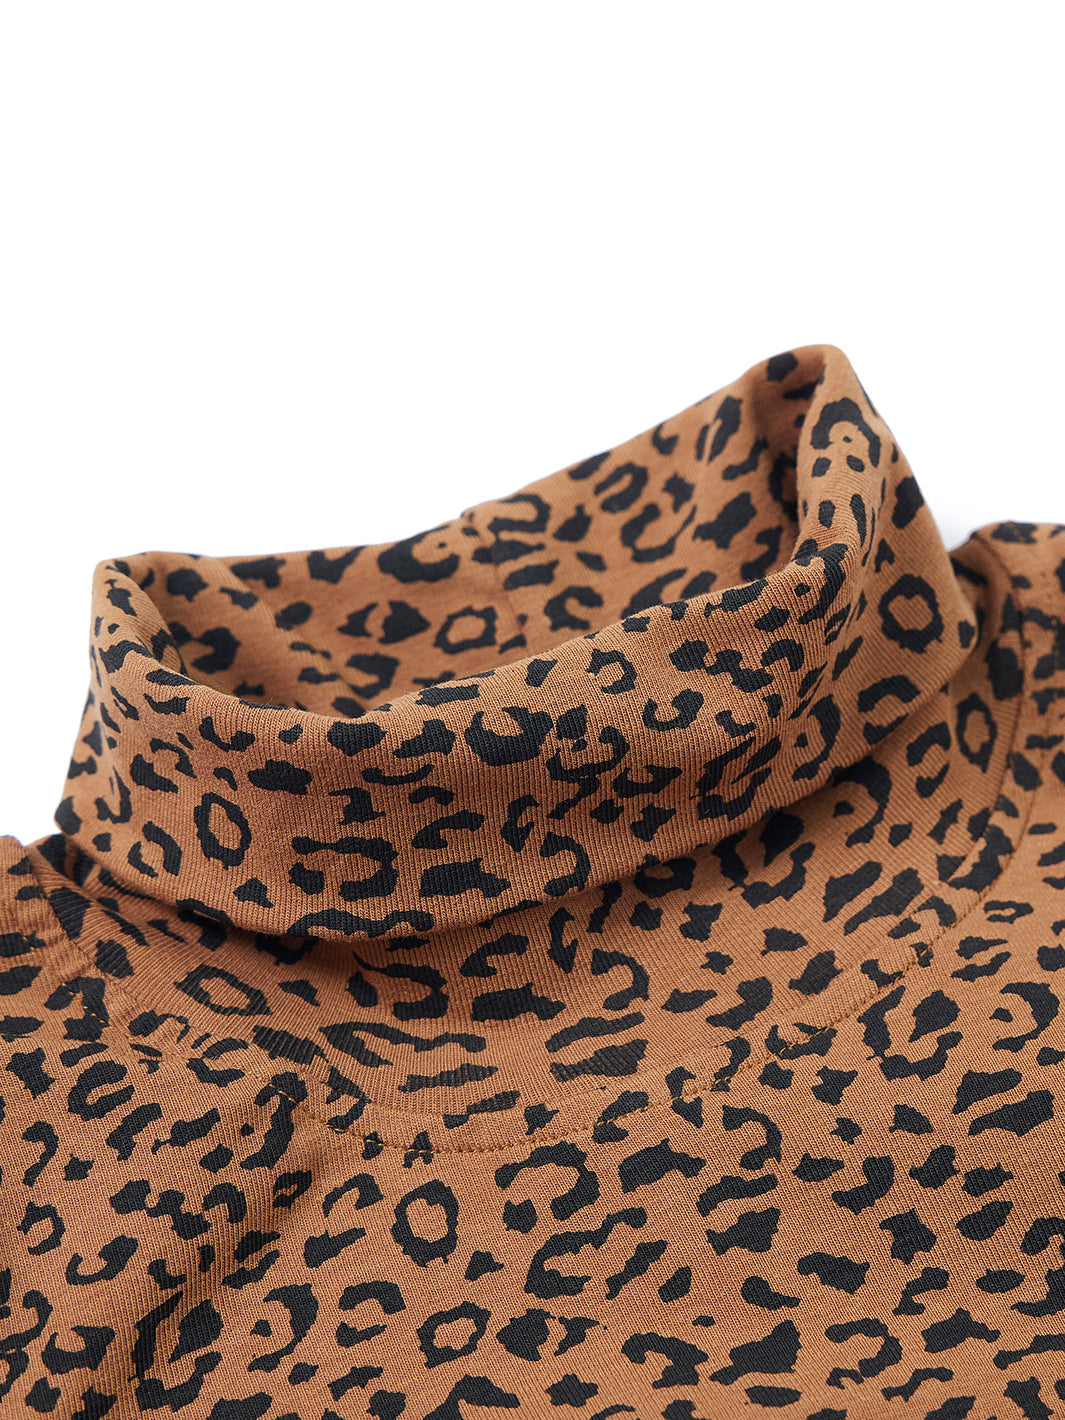 Leopard Turtleneck Dress